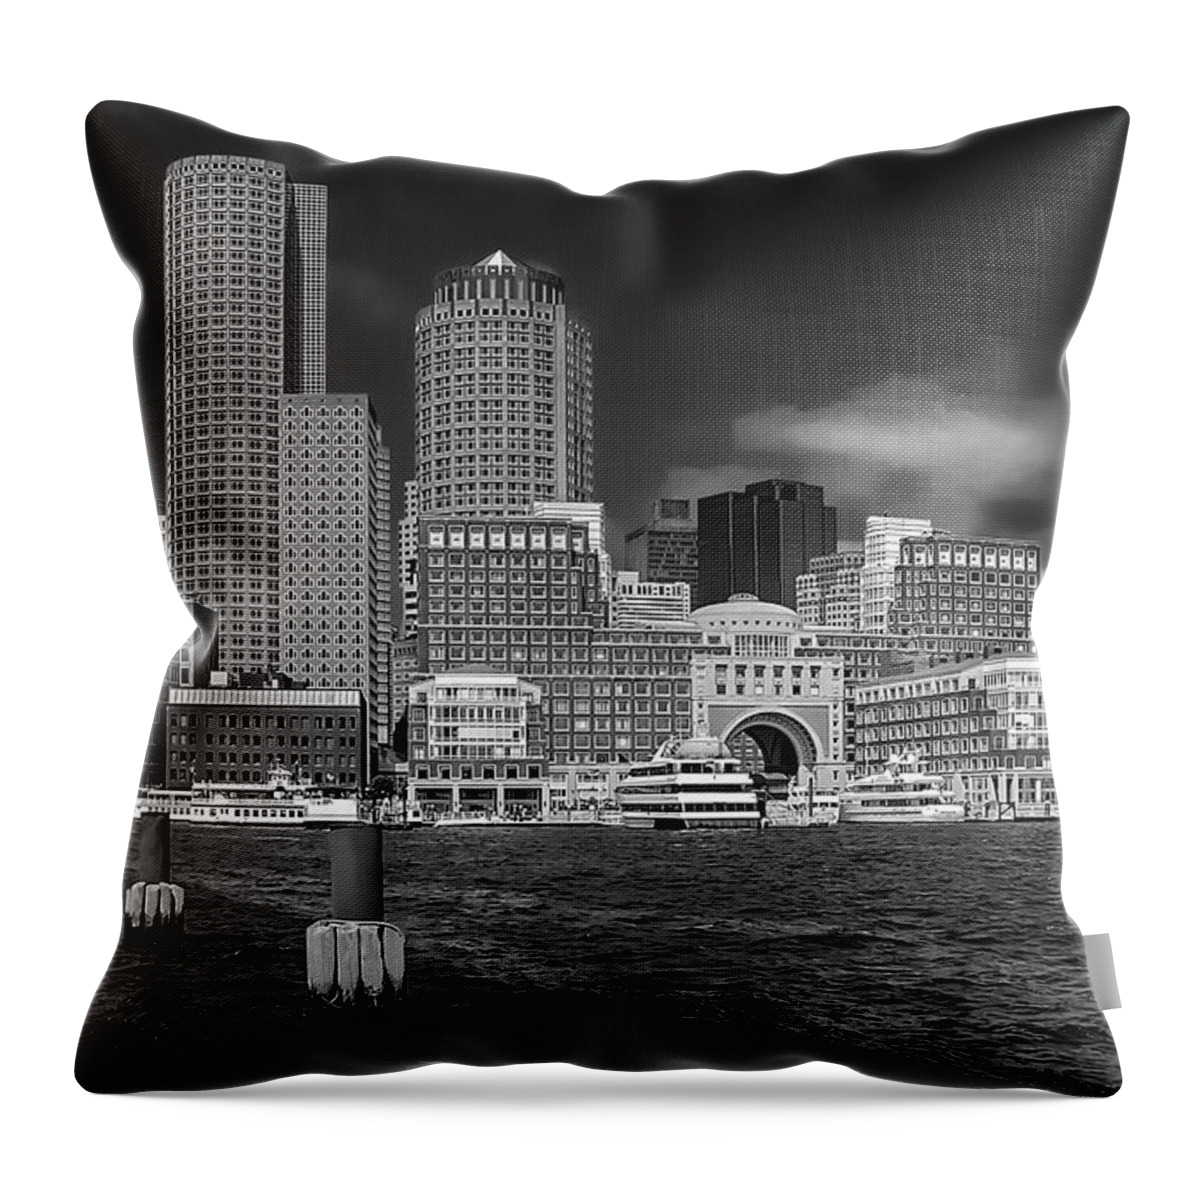 Boston Harbor Throw Pillow featuring the photograph Boston Harbor Skyline by Robert Mitchell